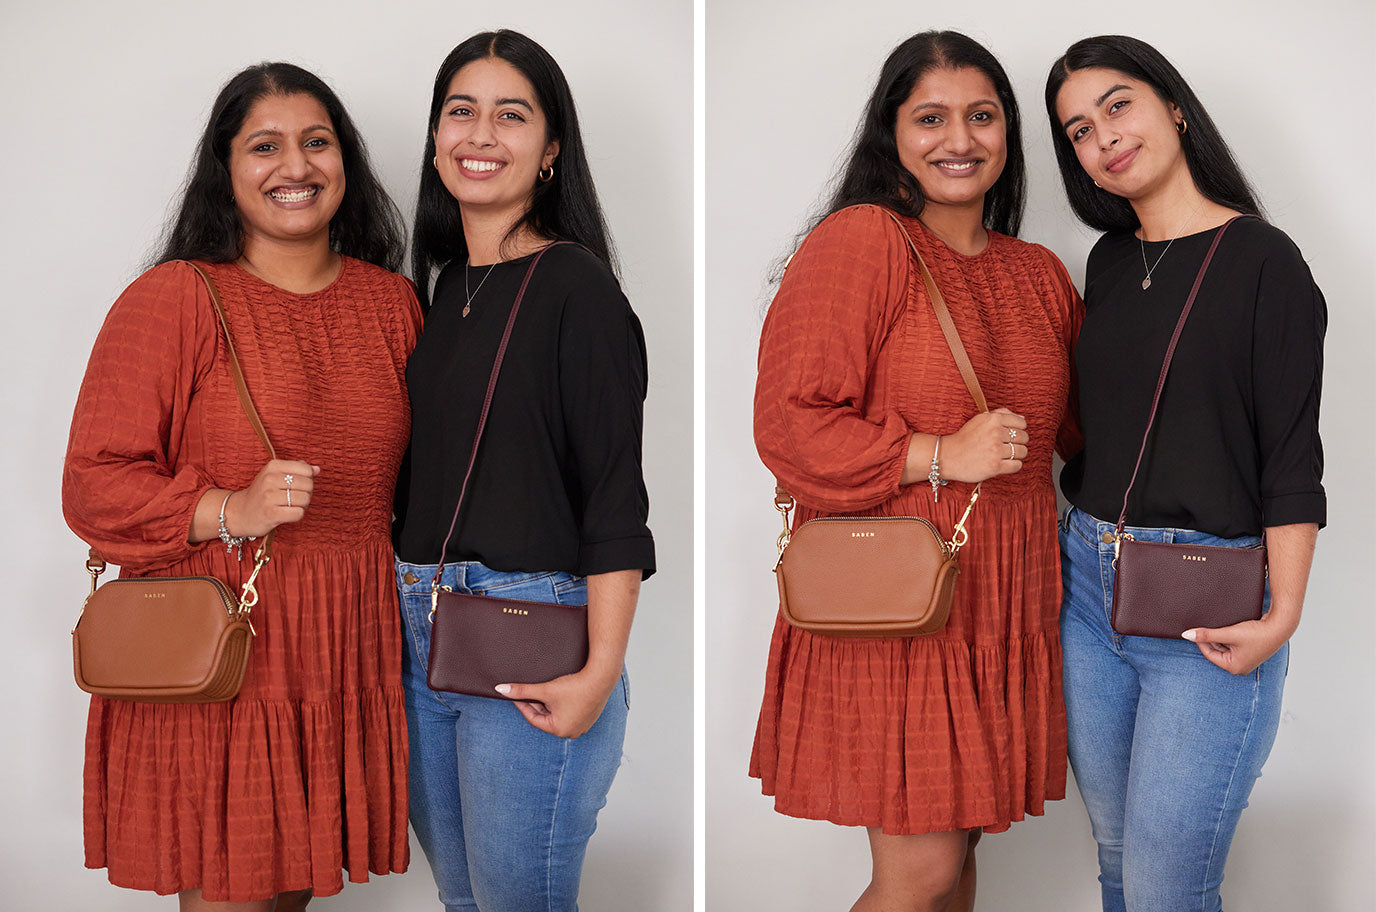 Saben women in business Girls Who Invest Simran Kaur​ and Sonya Gupthan